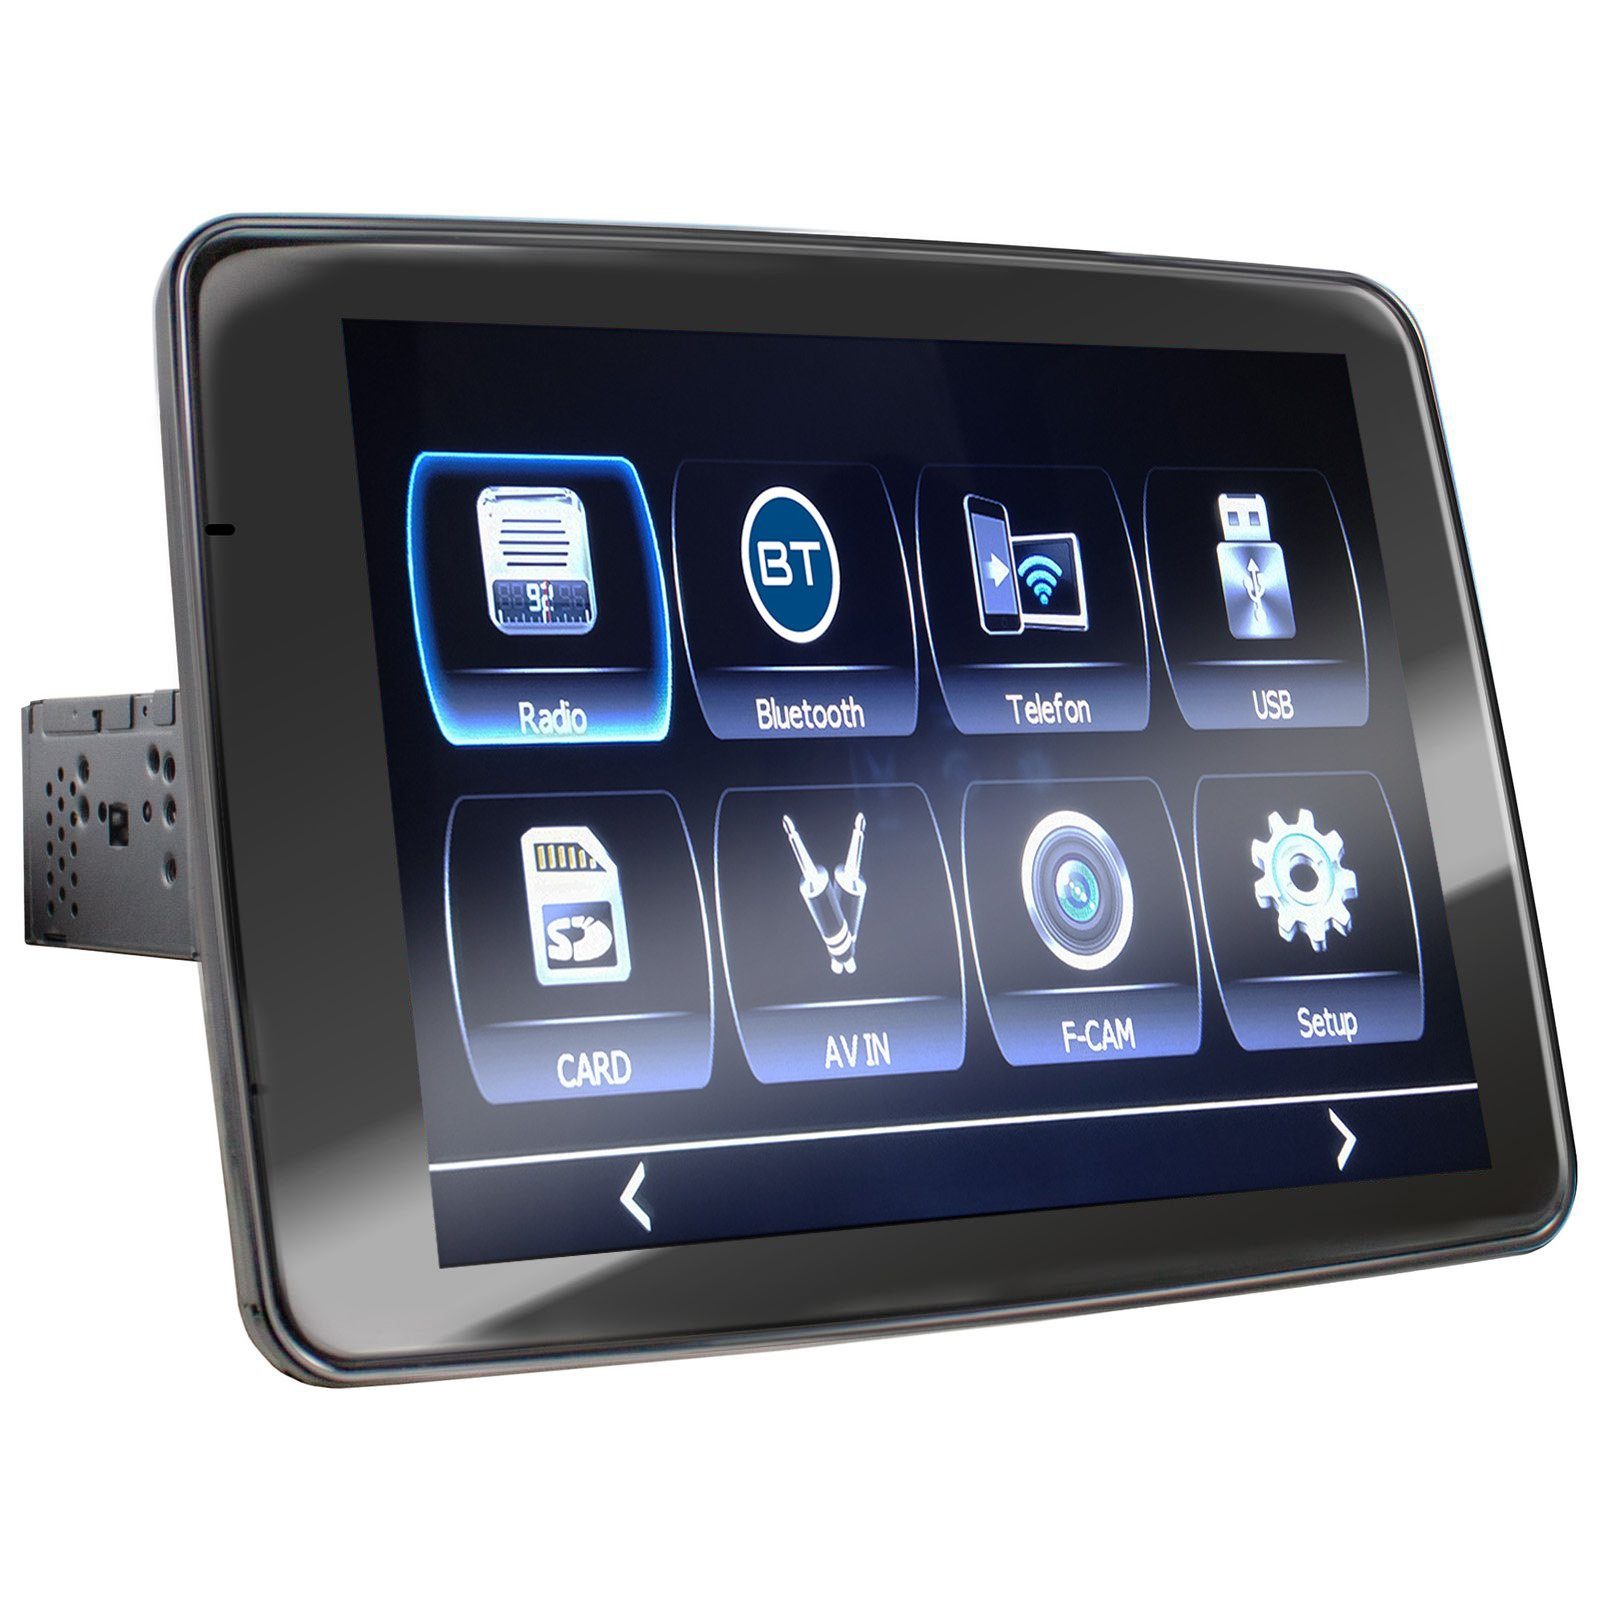 XOMAX XM-V747 Autoradio mit 7 Zoll Bildschirm, Bluetooth, USB, SD, 1 DIN  Autoradio